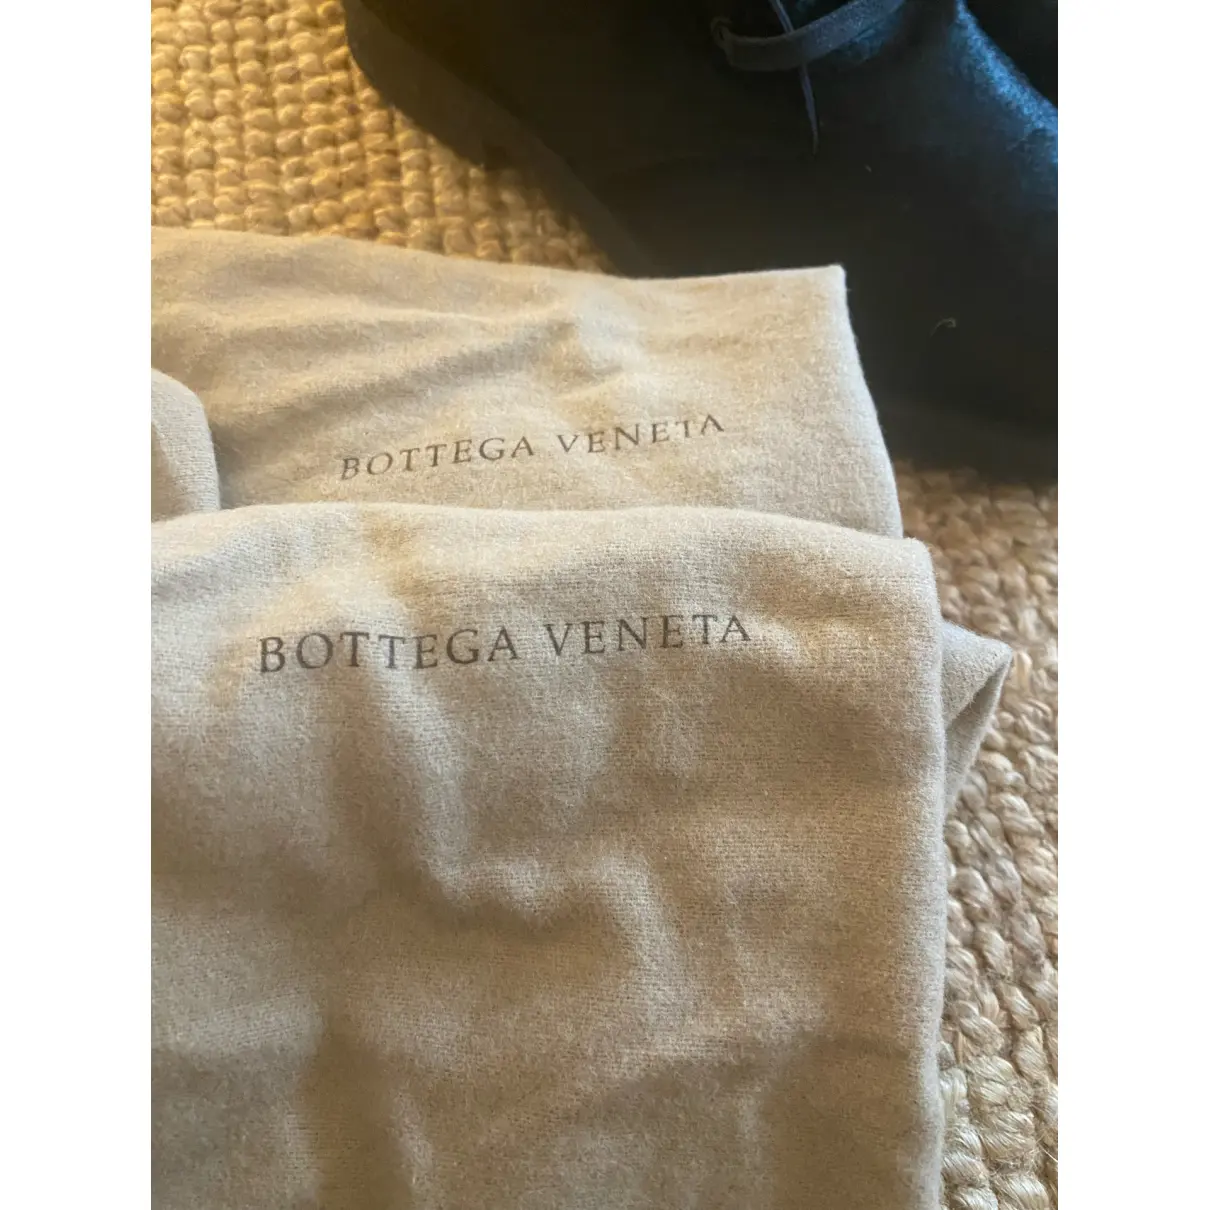 Buy Bottega Veneta Pony-style calfskin boots online